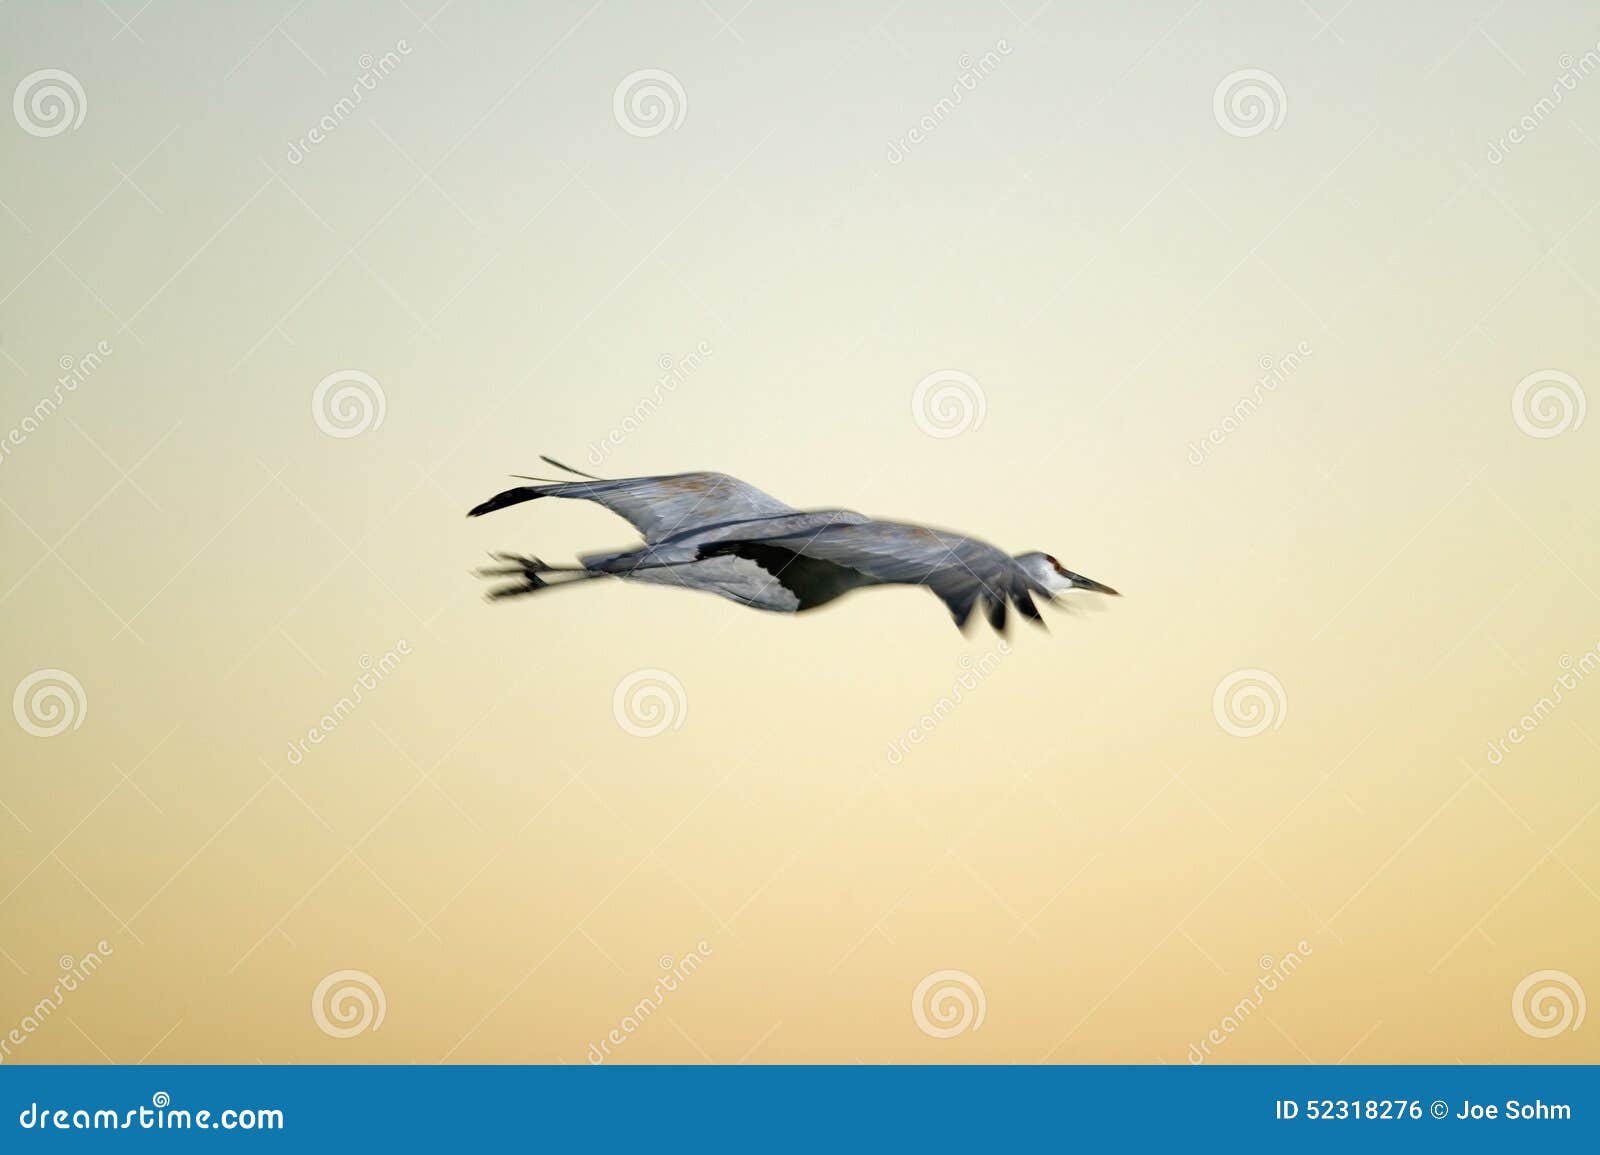 sandhill crane flies over the bosque del apache national wildlife refuge at sunrise, near san antonio and socorro, new mexico